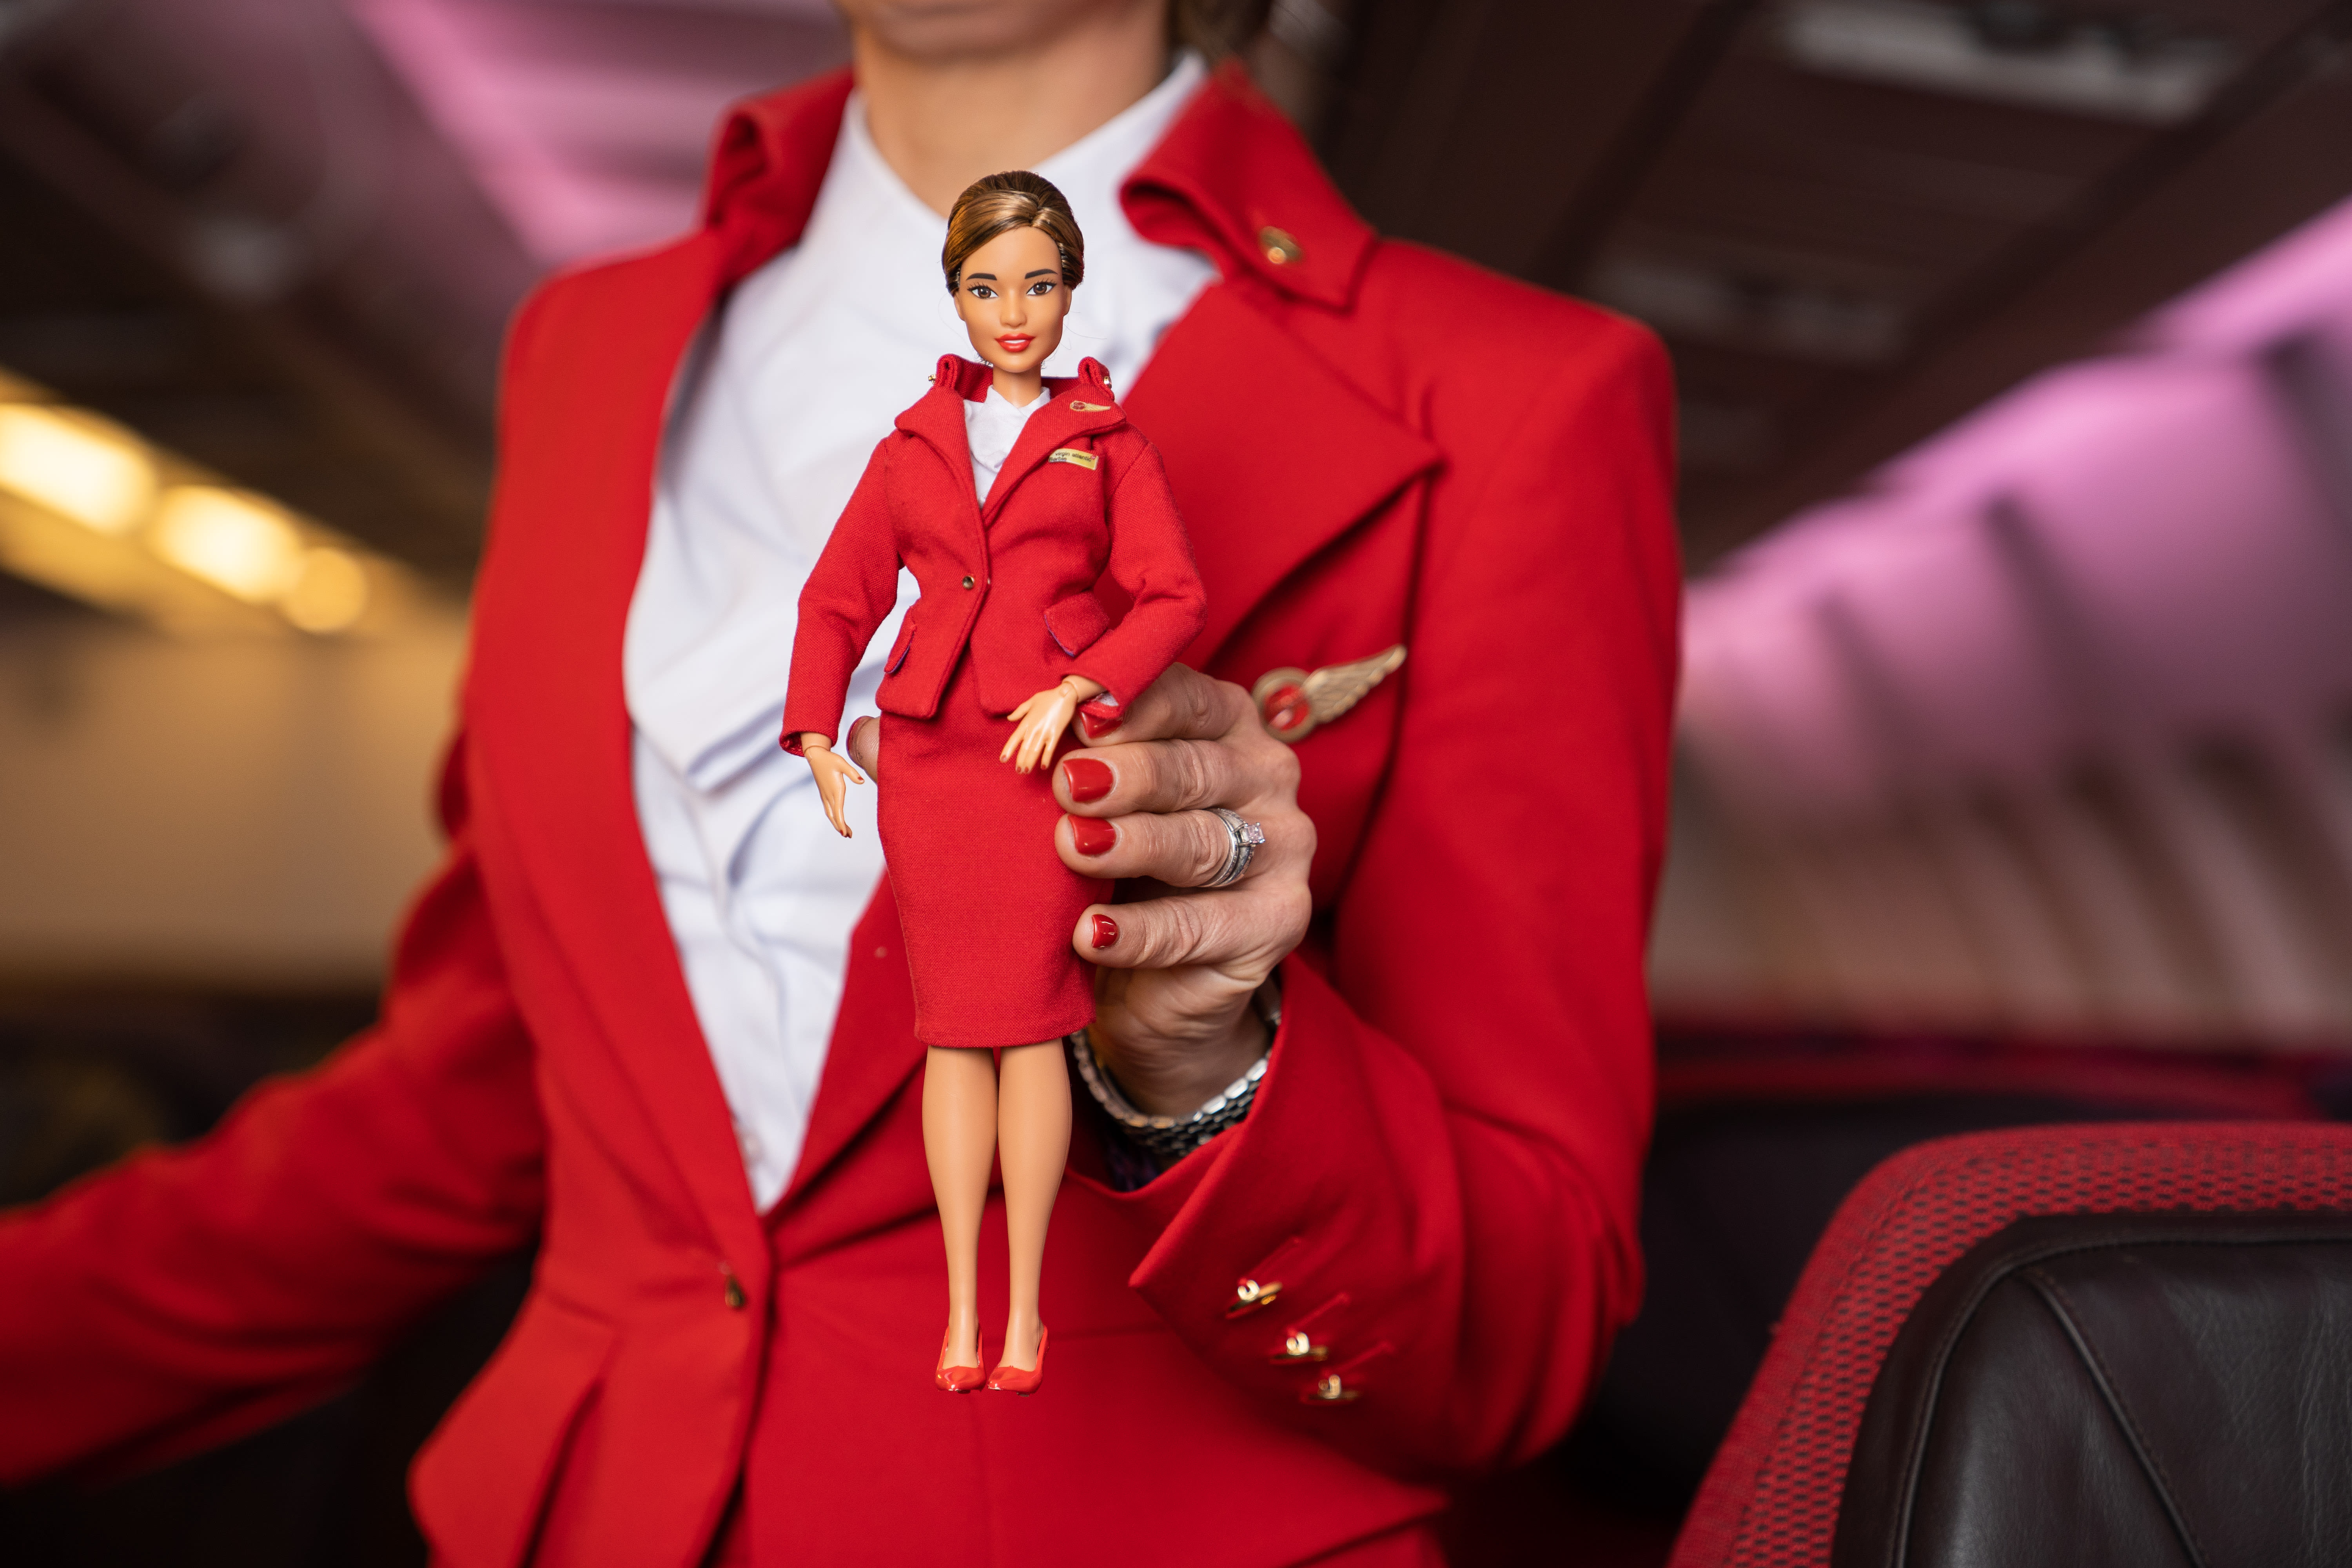 A Virgin Atlantic cabin crew member holds a Barbie dressed as Virgin Atlantic cabin crew